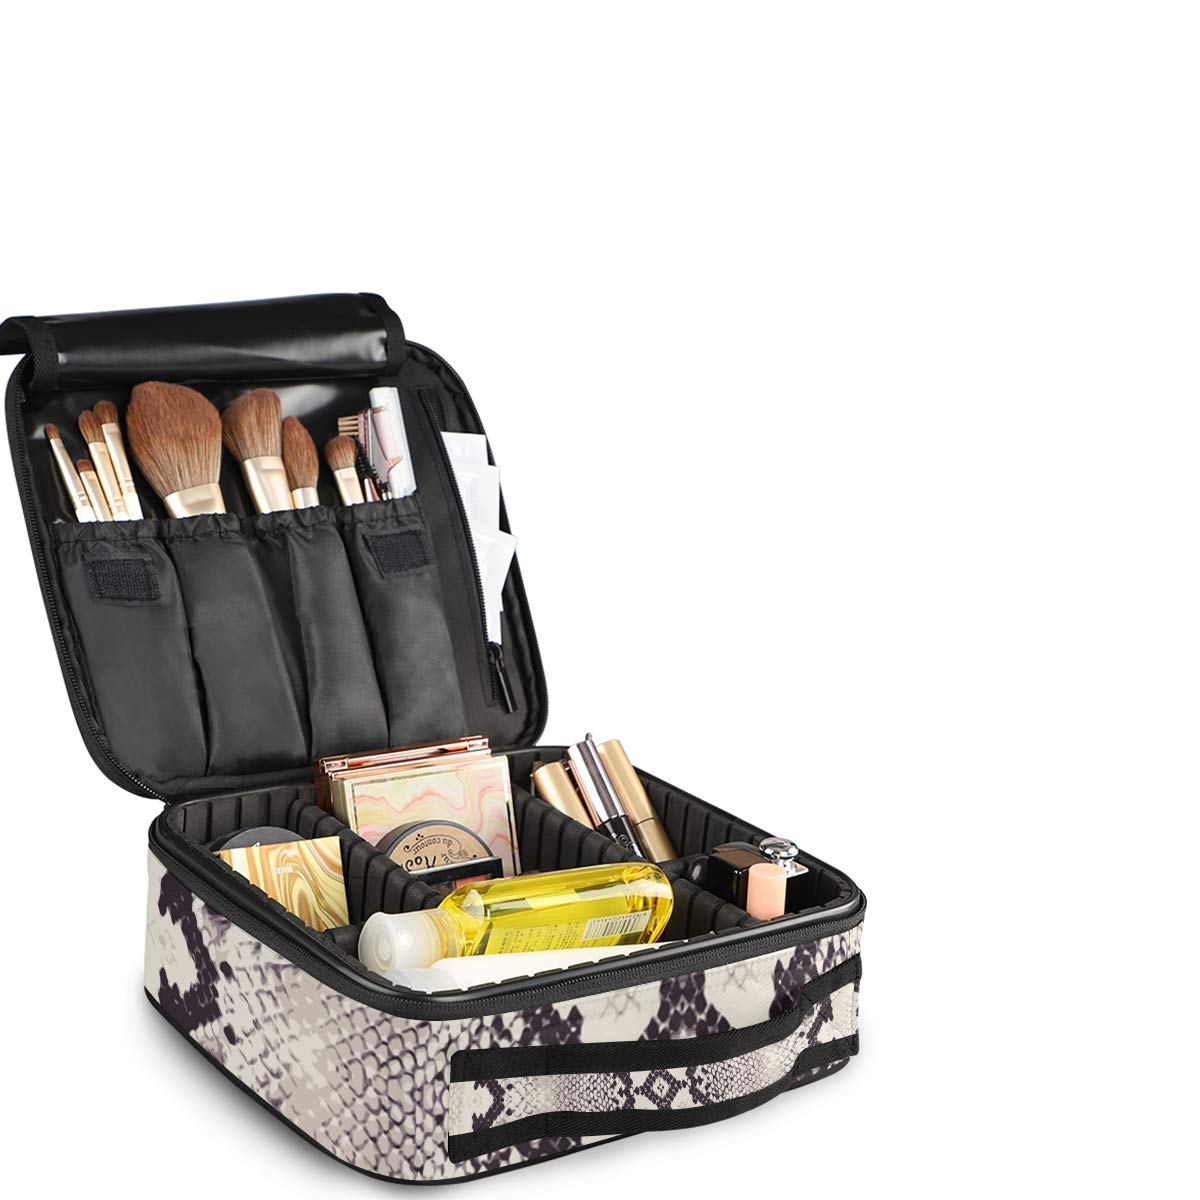 ALAZA Travel Makeup Case, Snake Skin Grunge Cosmetic toiletry Travel bag for Women Girls